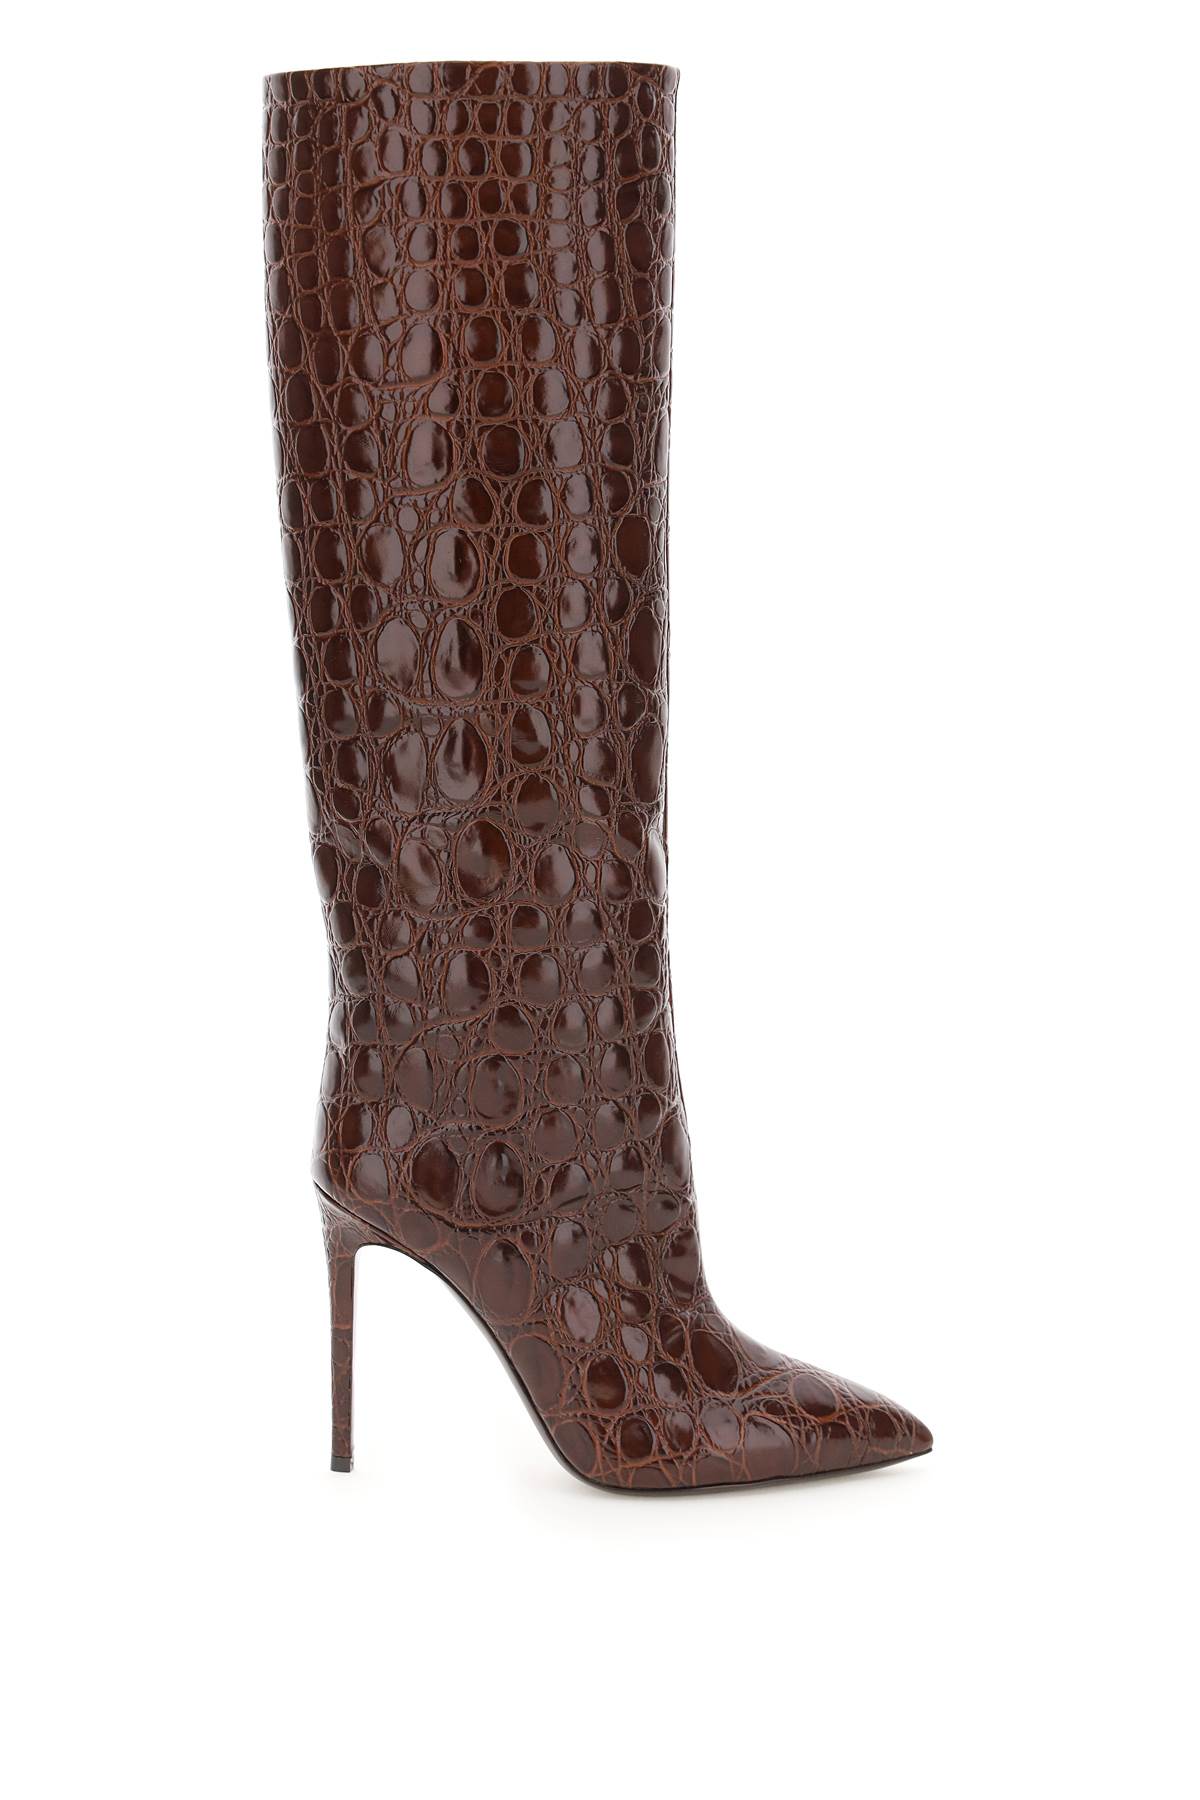 Paris Texas Maxi Croco-embossed Leather Stiletto Boots